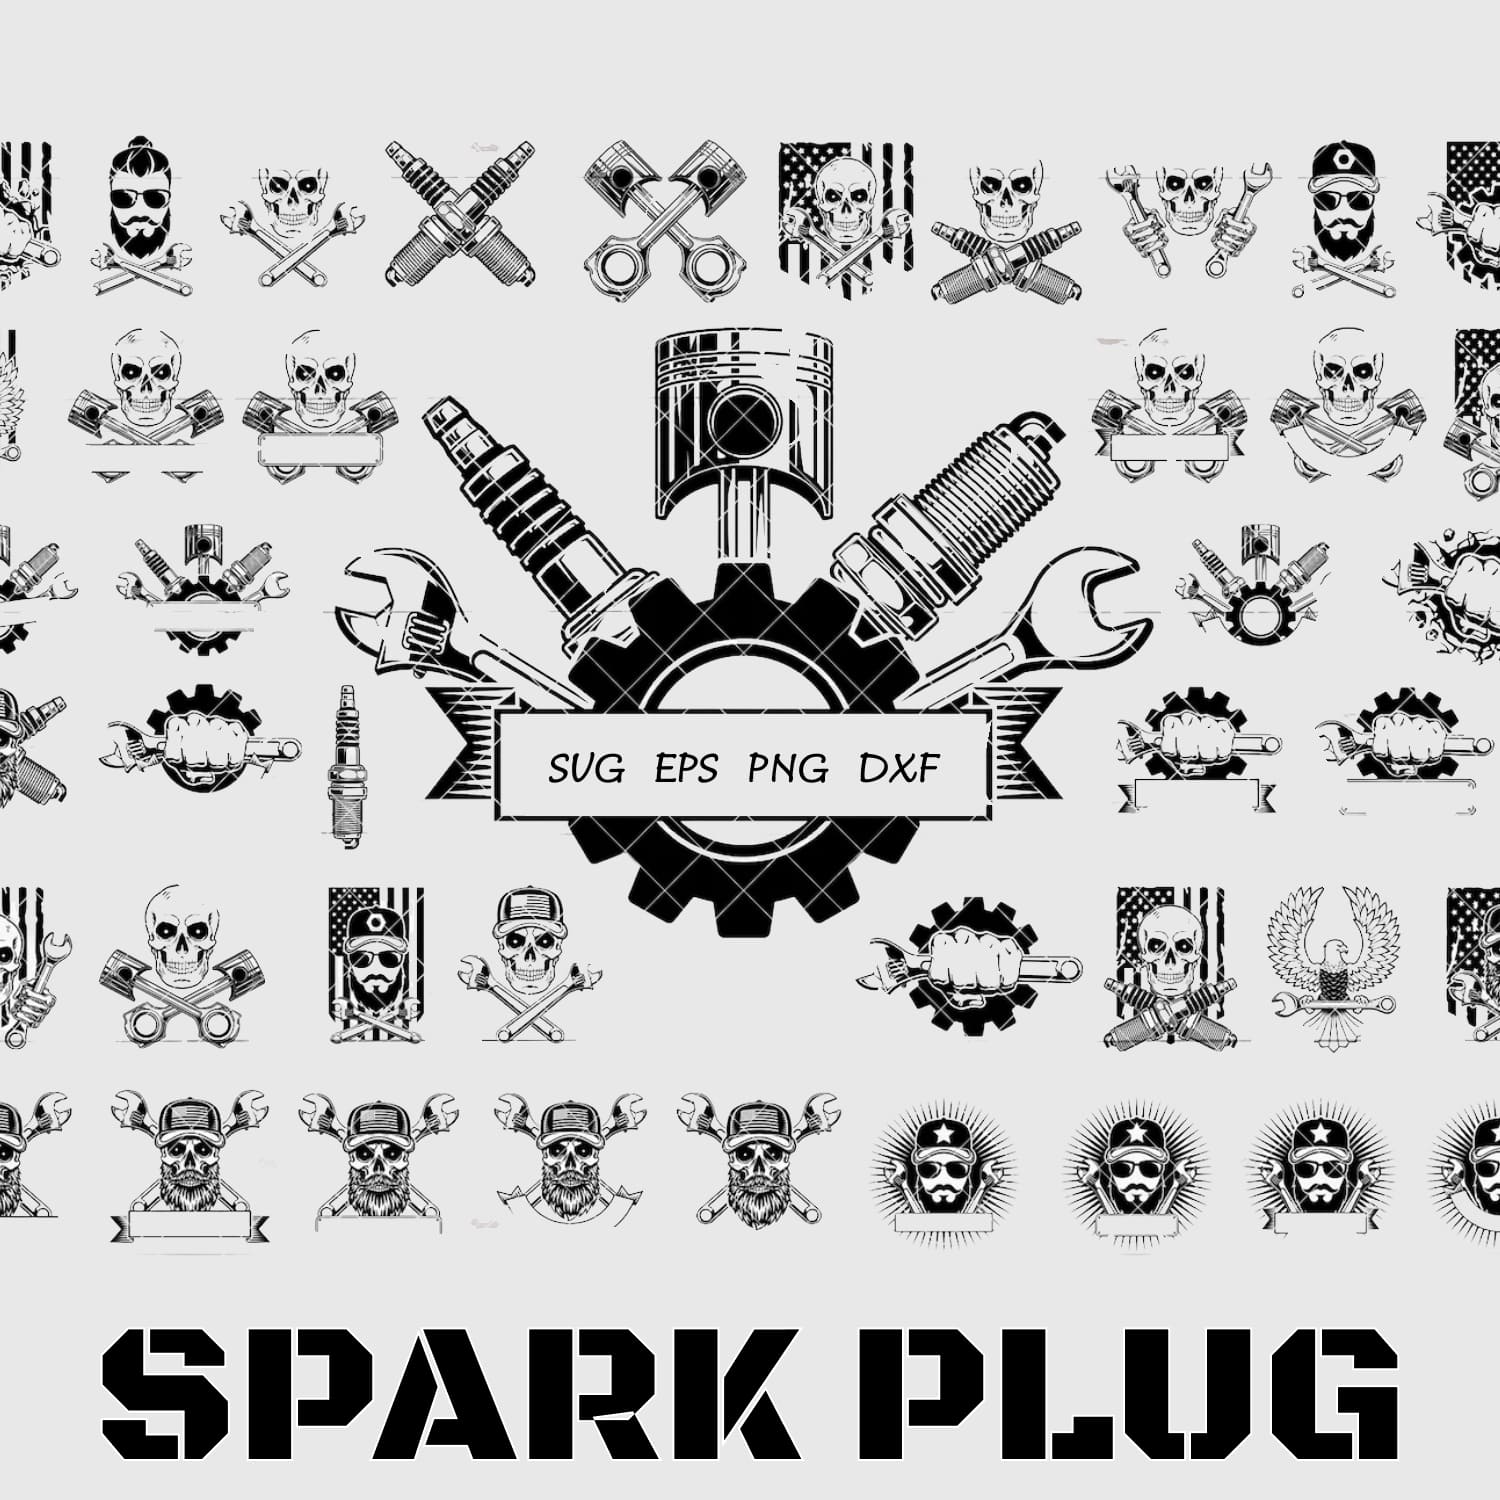 Spark Plug preview image.